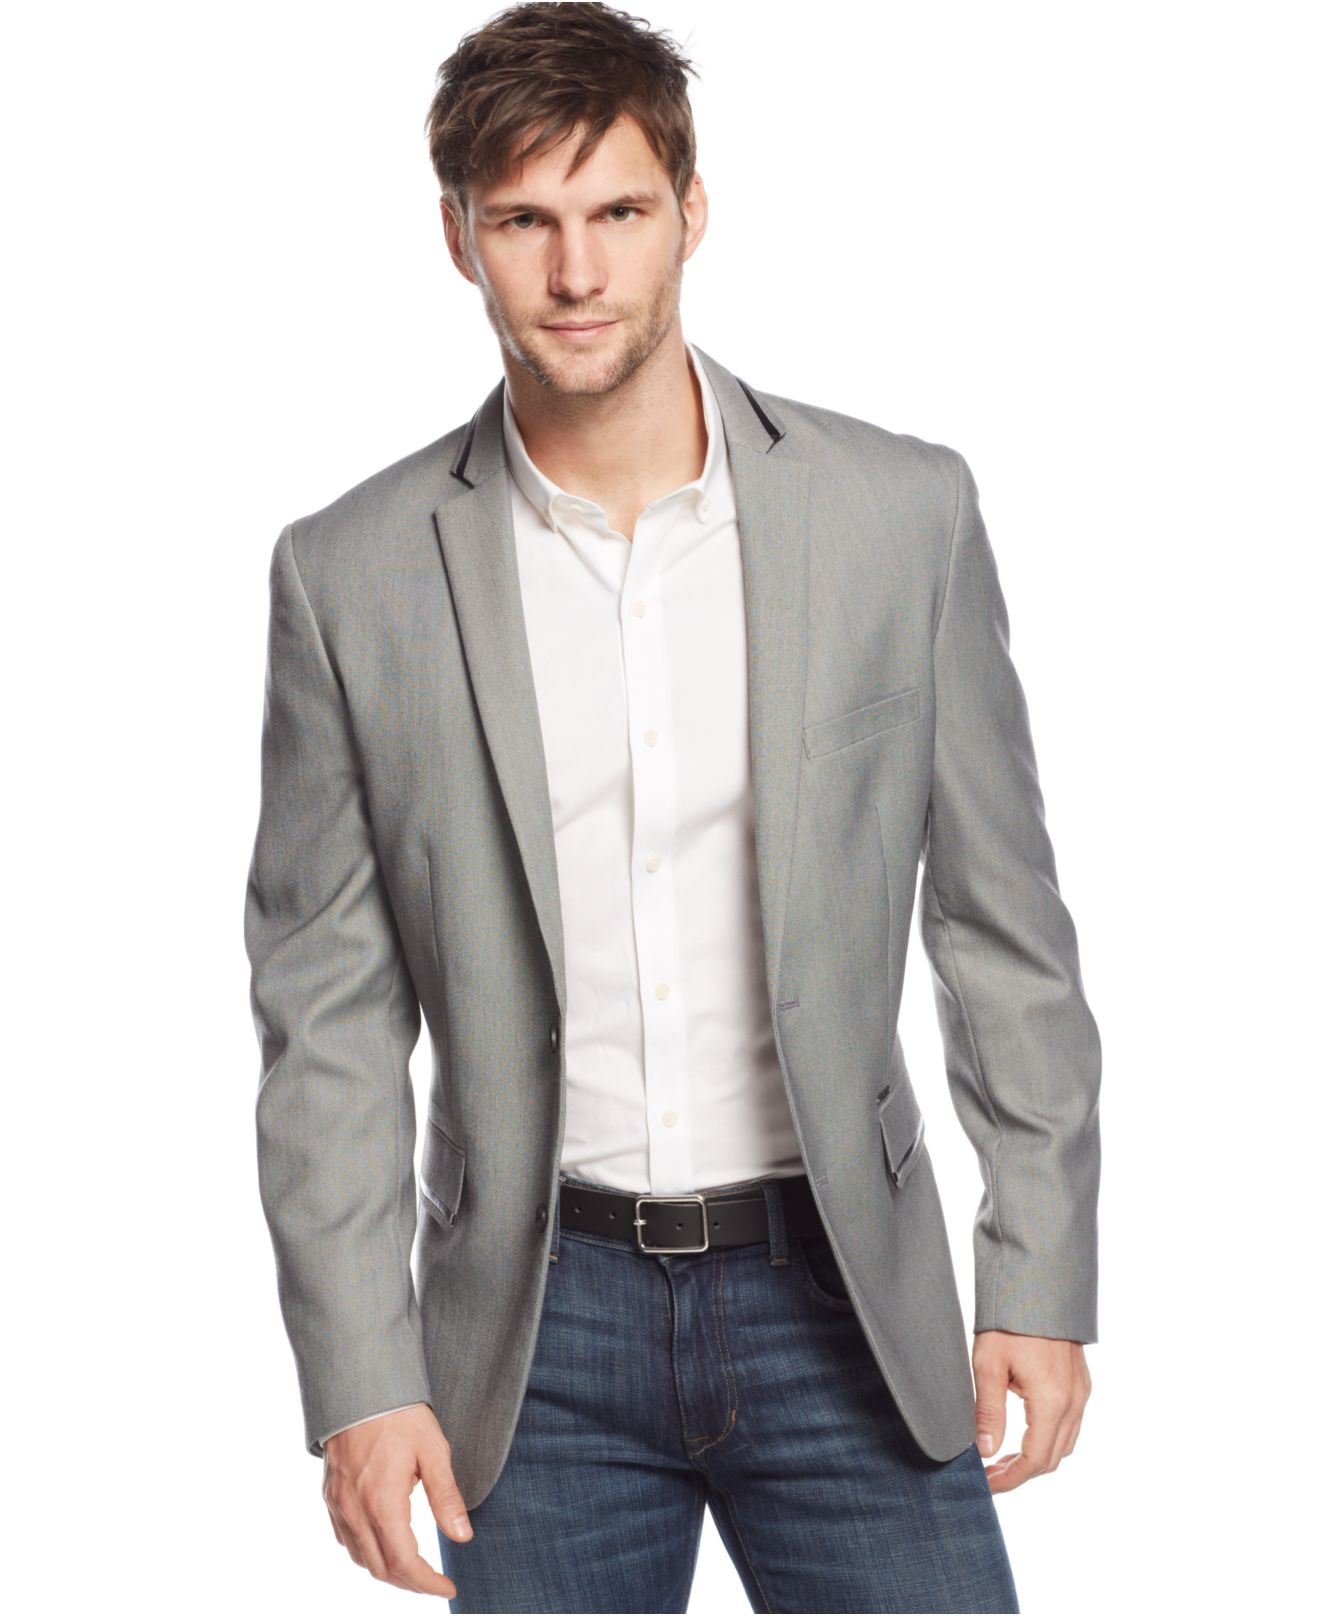 Lyst - Inc International Concepts Williams Slim-Fit Blazer in Gray for Men